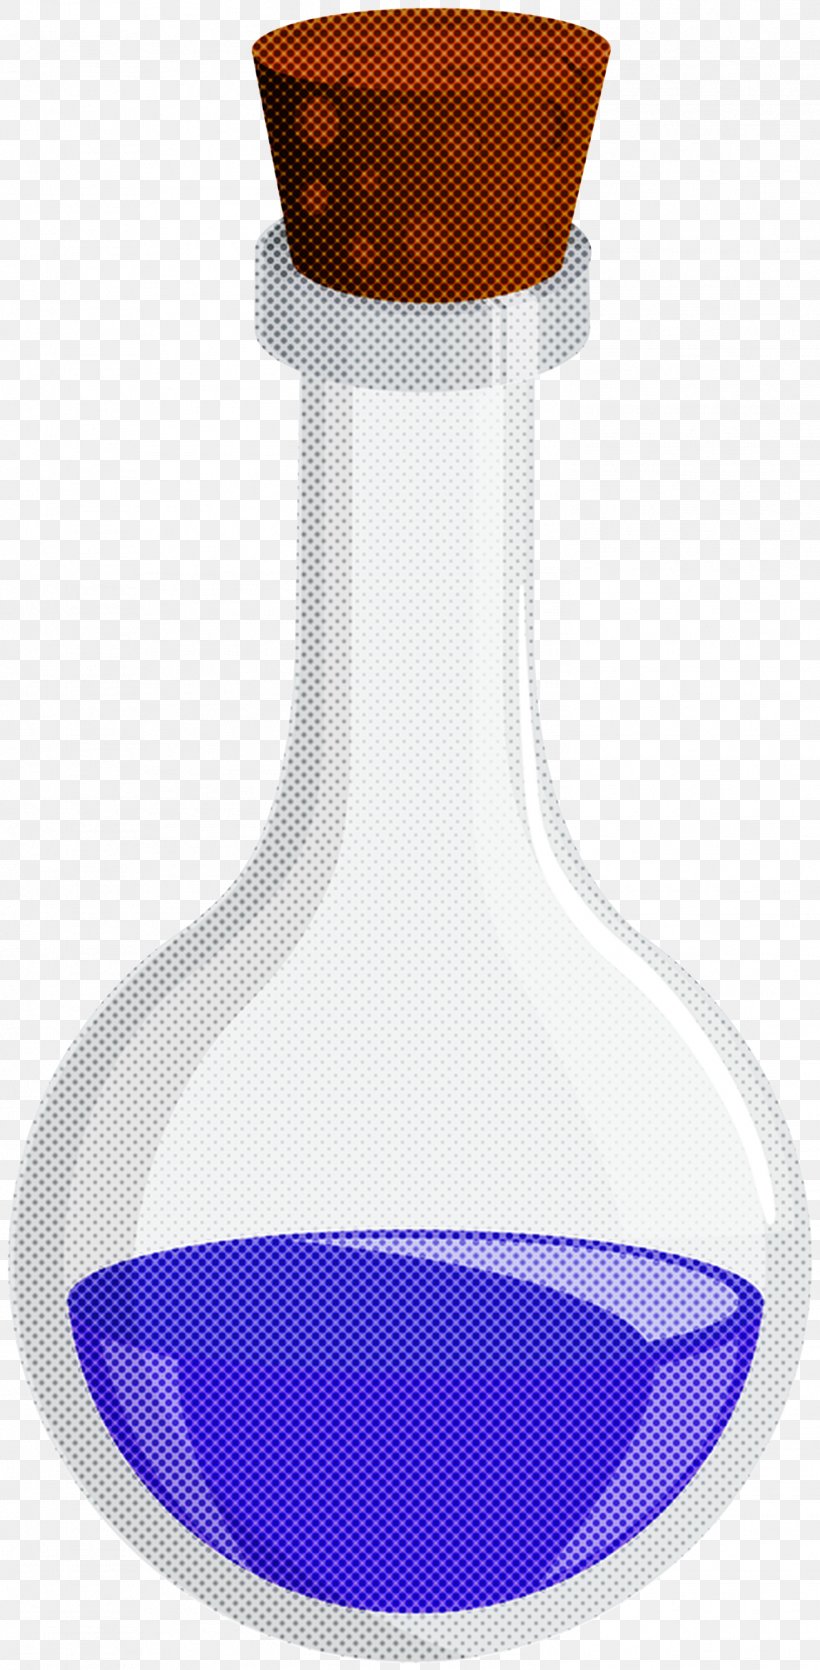 Laboratory Flask Bottle Flask Glass Bottle Barware, PNG, 1472x2998px, Laboratory Flask, Barware, Bottle, Decanter, Flask Download Free